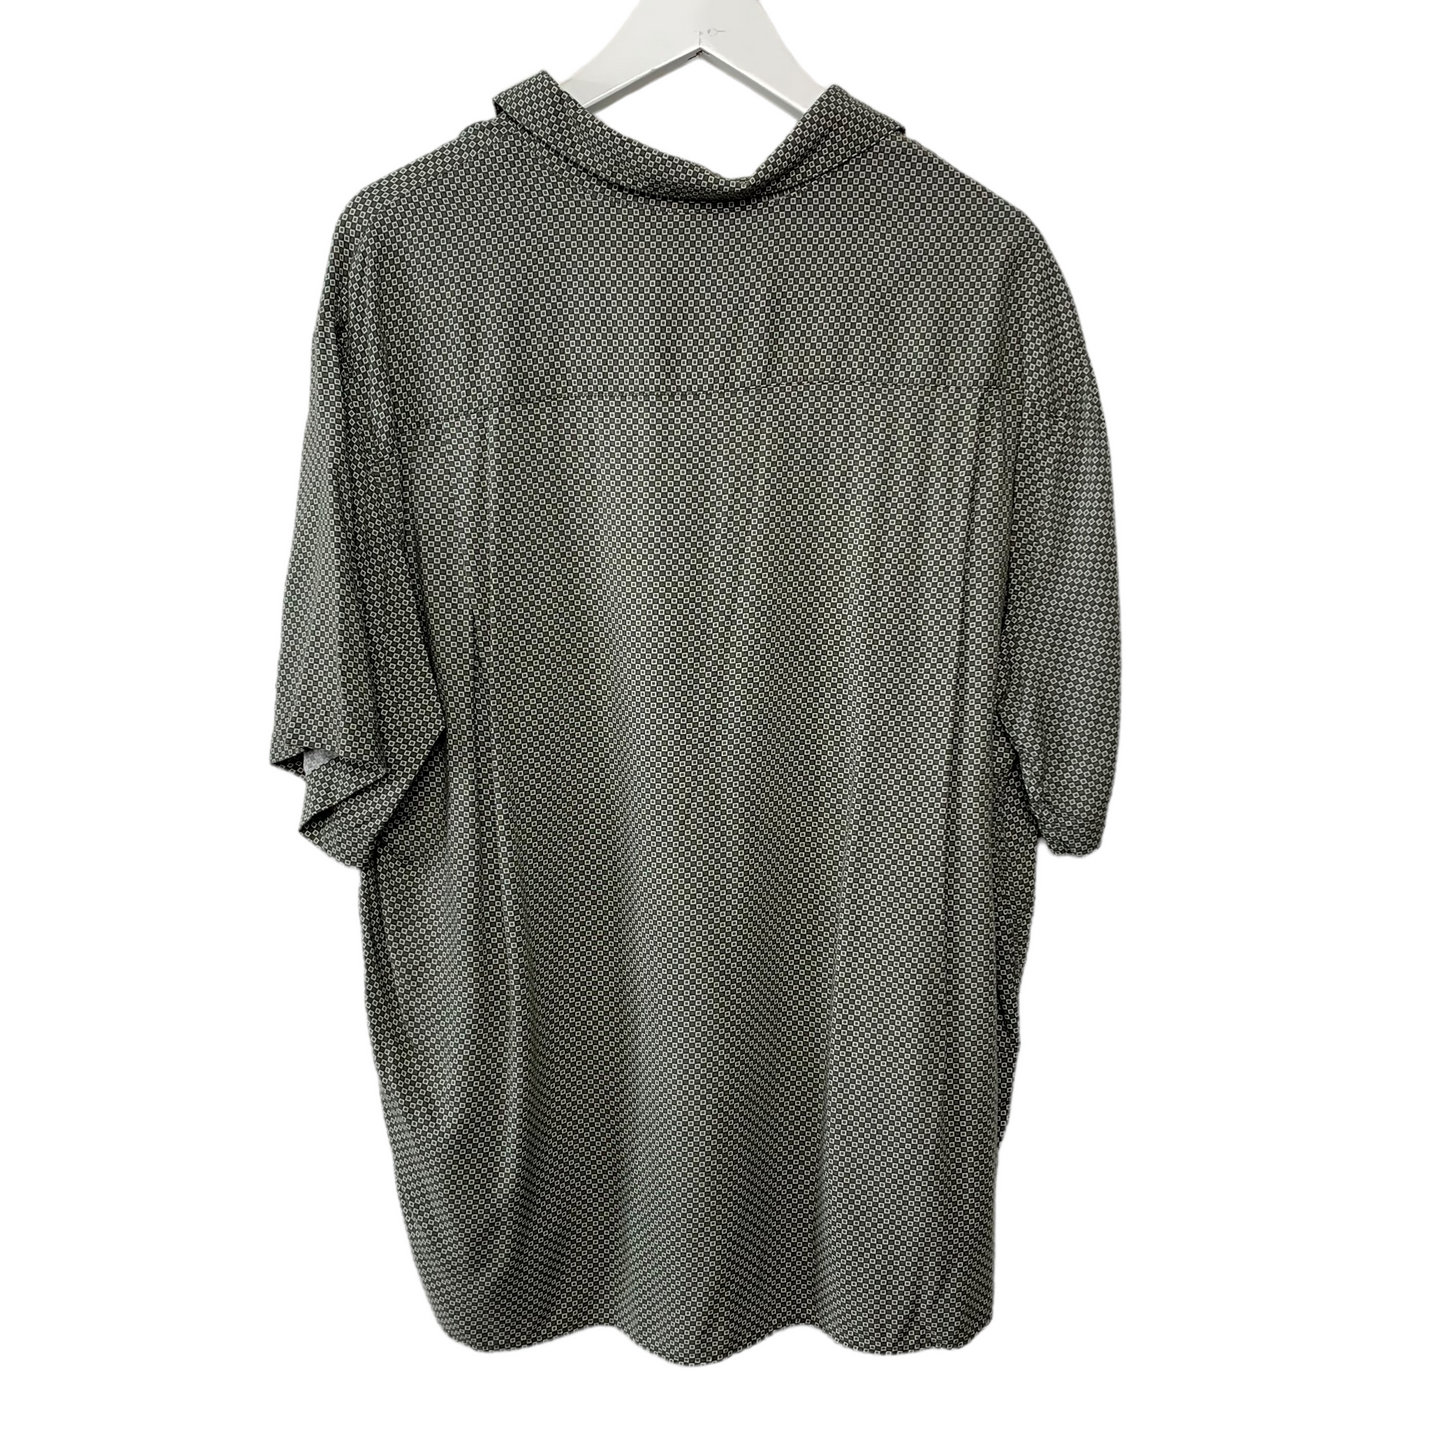 Batik Bay Geometric Print Short Sleeve Button Down Collared Shirt XL